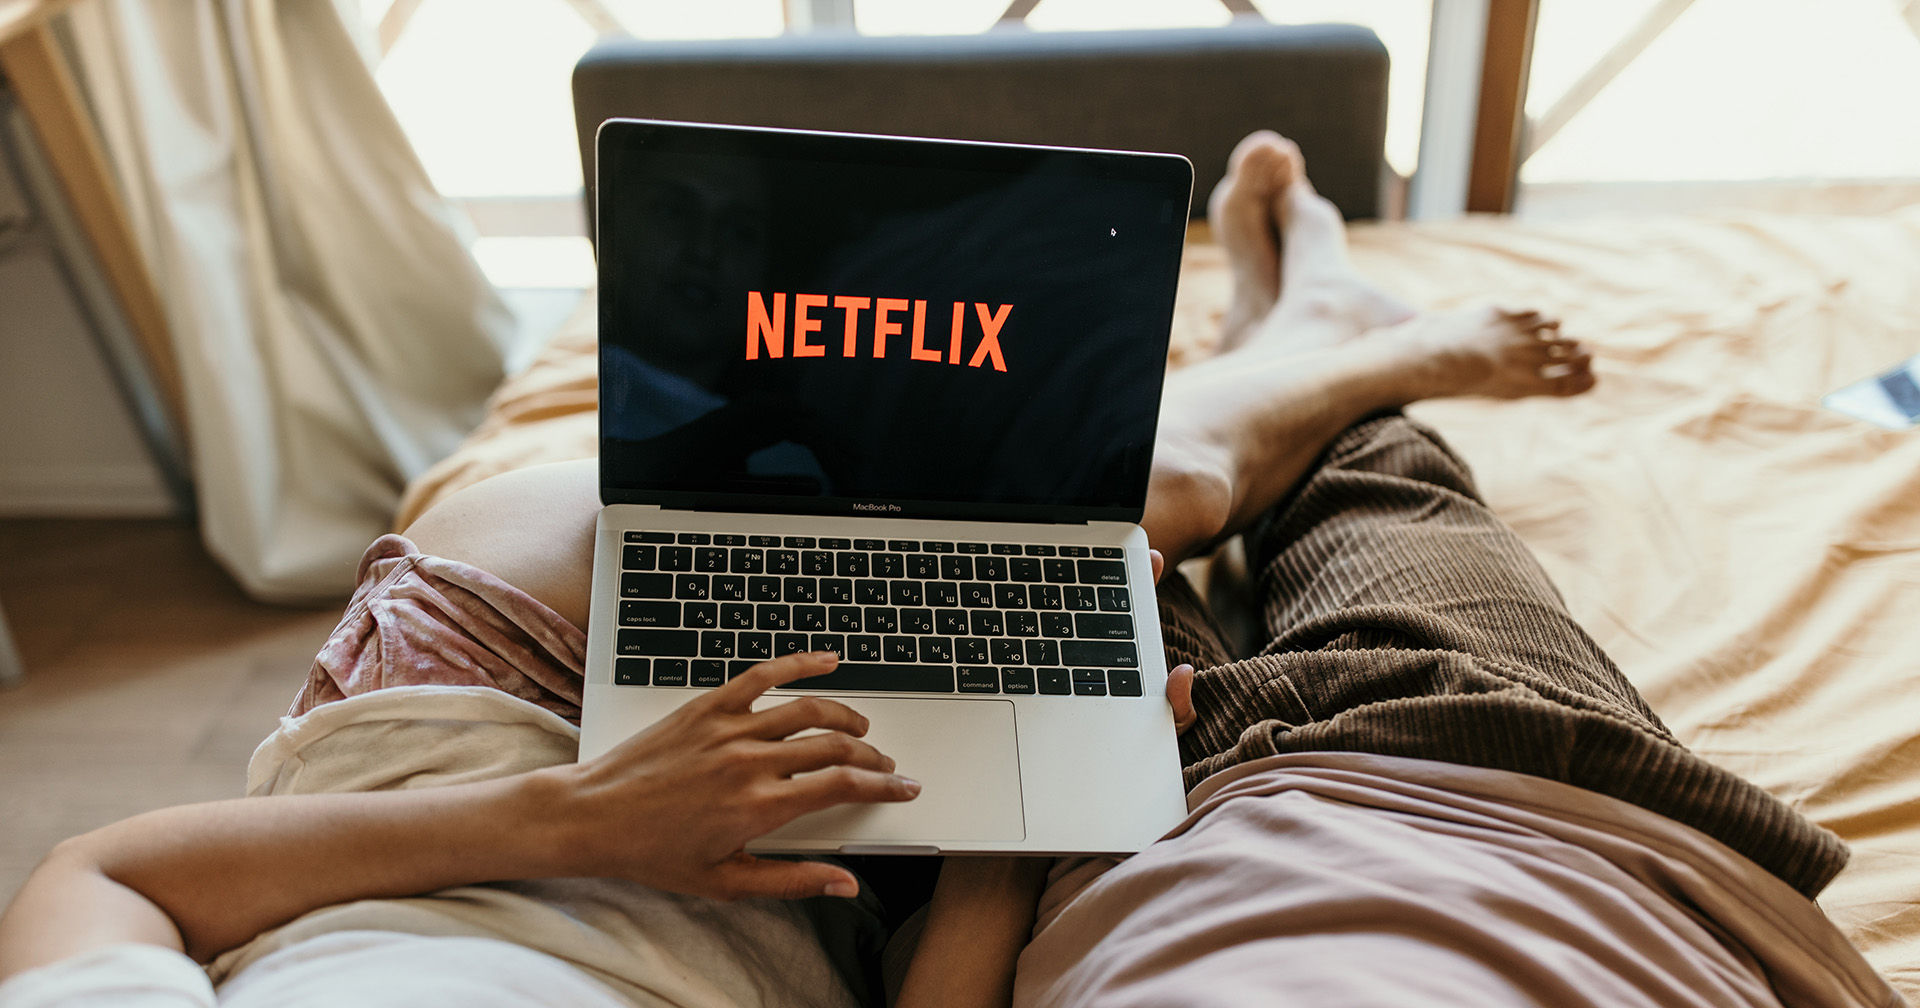 Netflix เริ่มราคาค่าบริการรายเดือนในสหราชอาณาจักร และไอร์แลนด์ เพื่อลงทุนสร้างผลงานที่มีคุณภาพสูงขึ้น